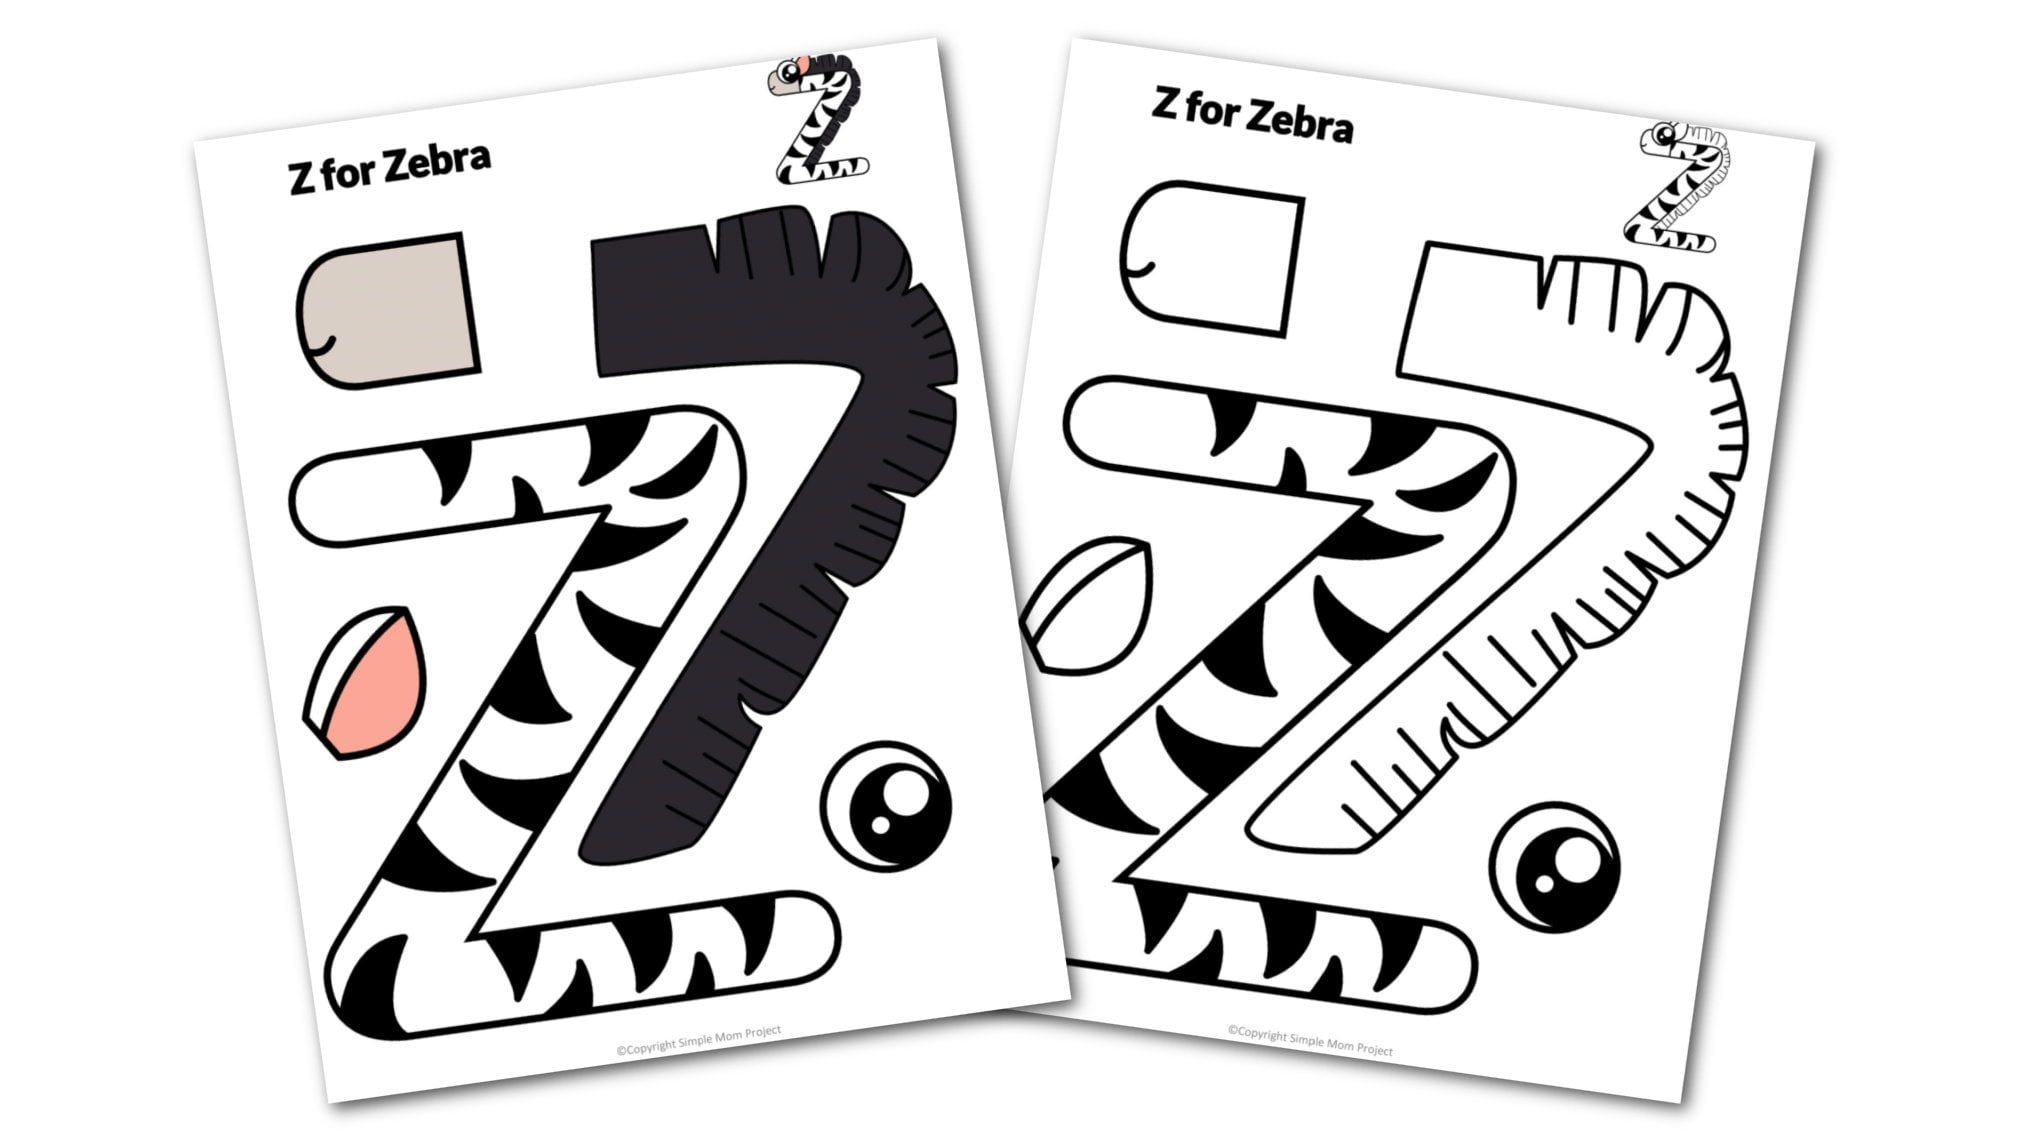 Printable Letter Z Craft